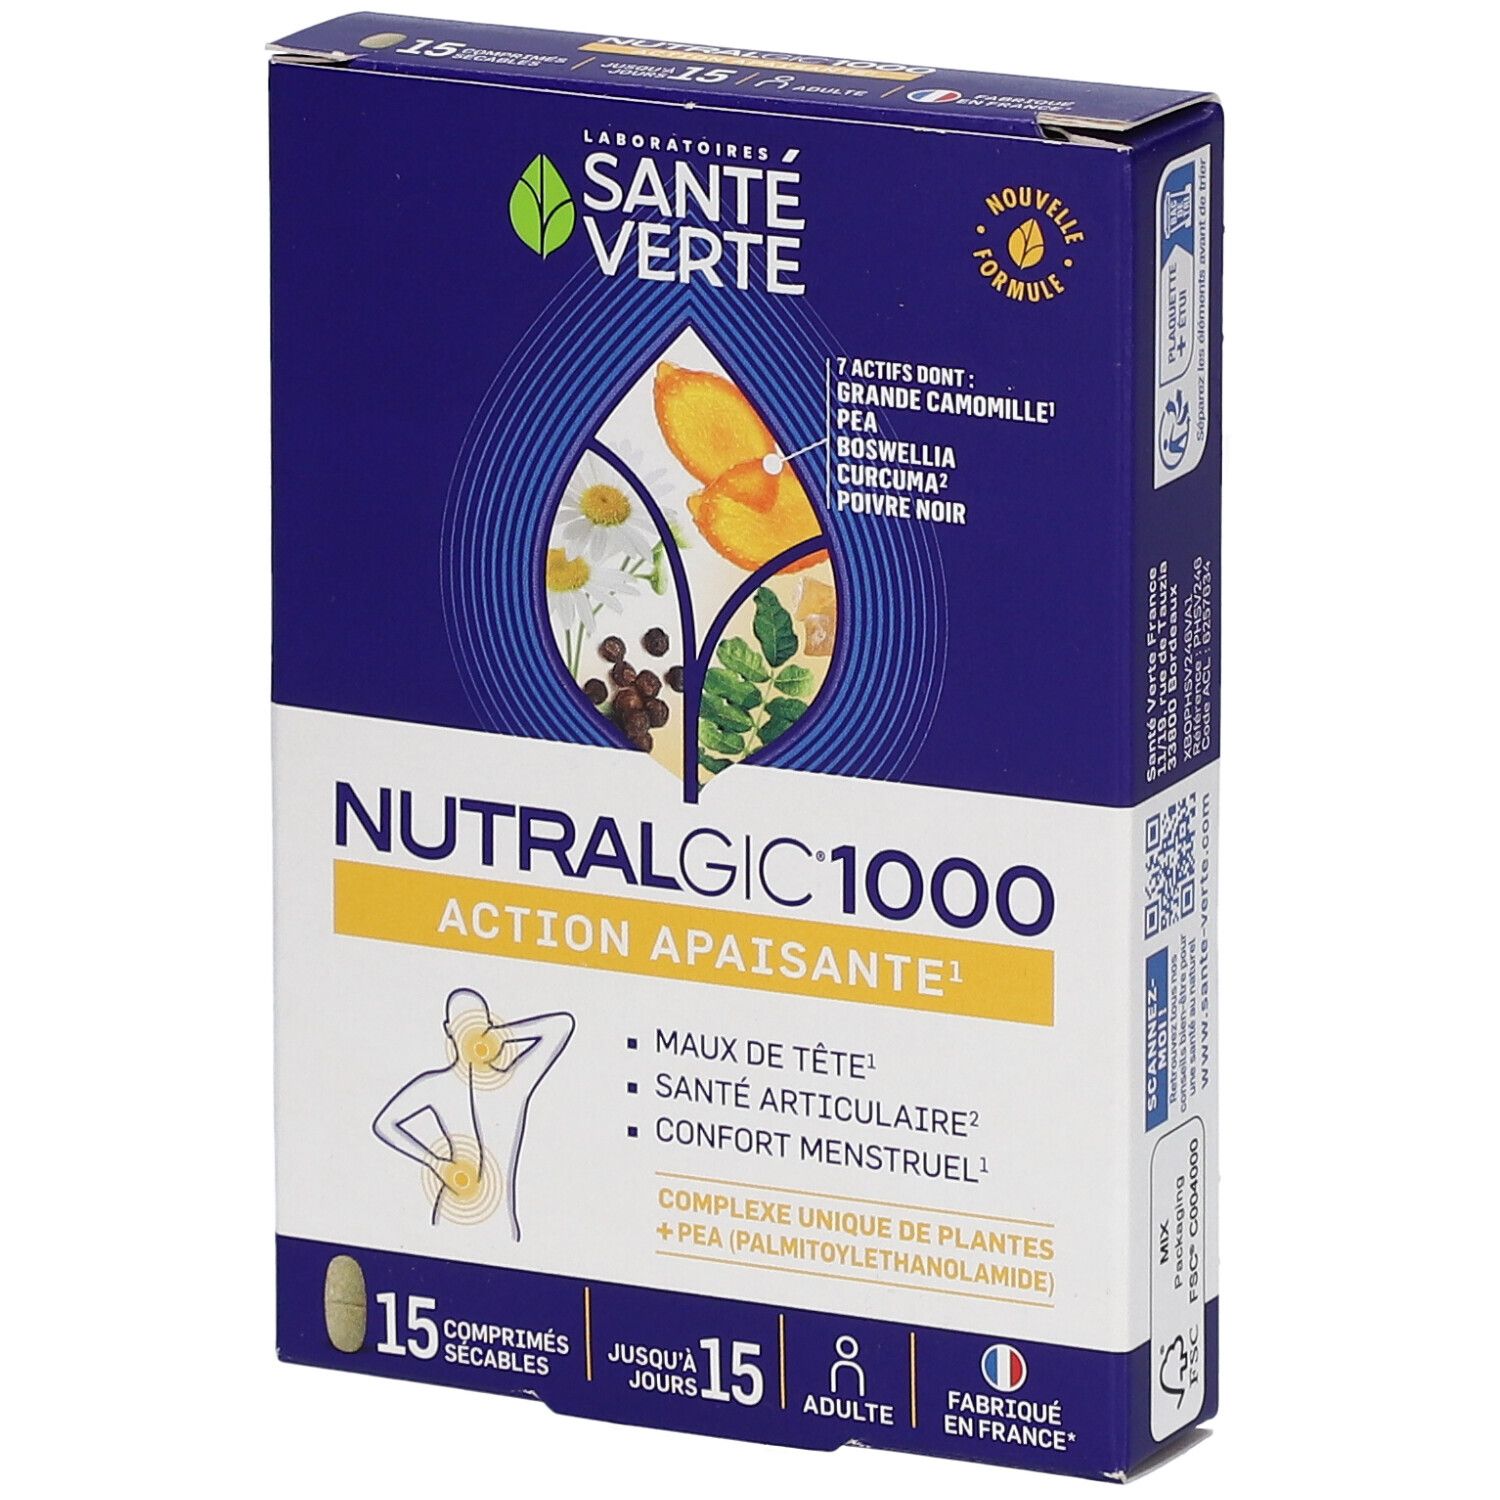 Sante Verte Nutralgic® 1000 Action apaisante